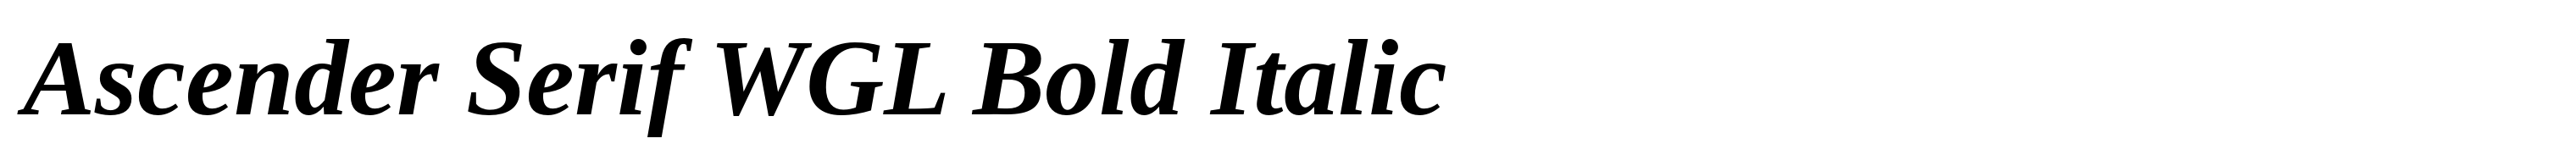 Ascender Serif WGL Bold Italic